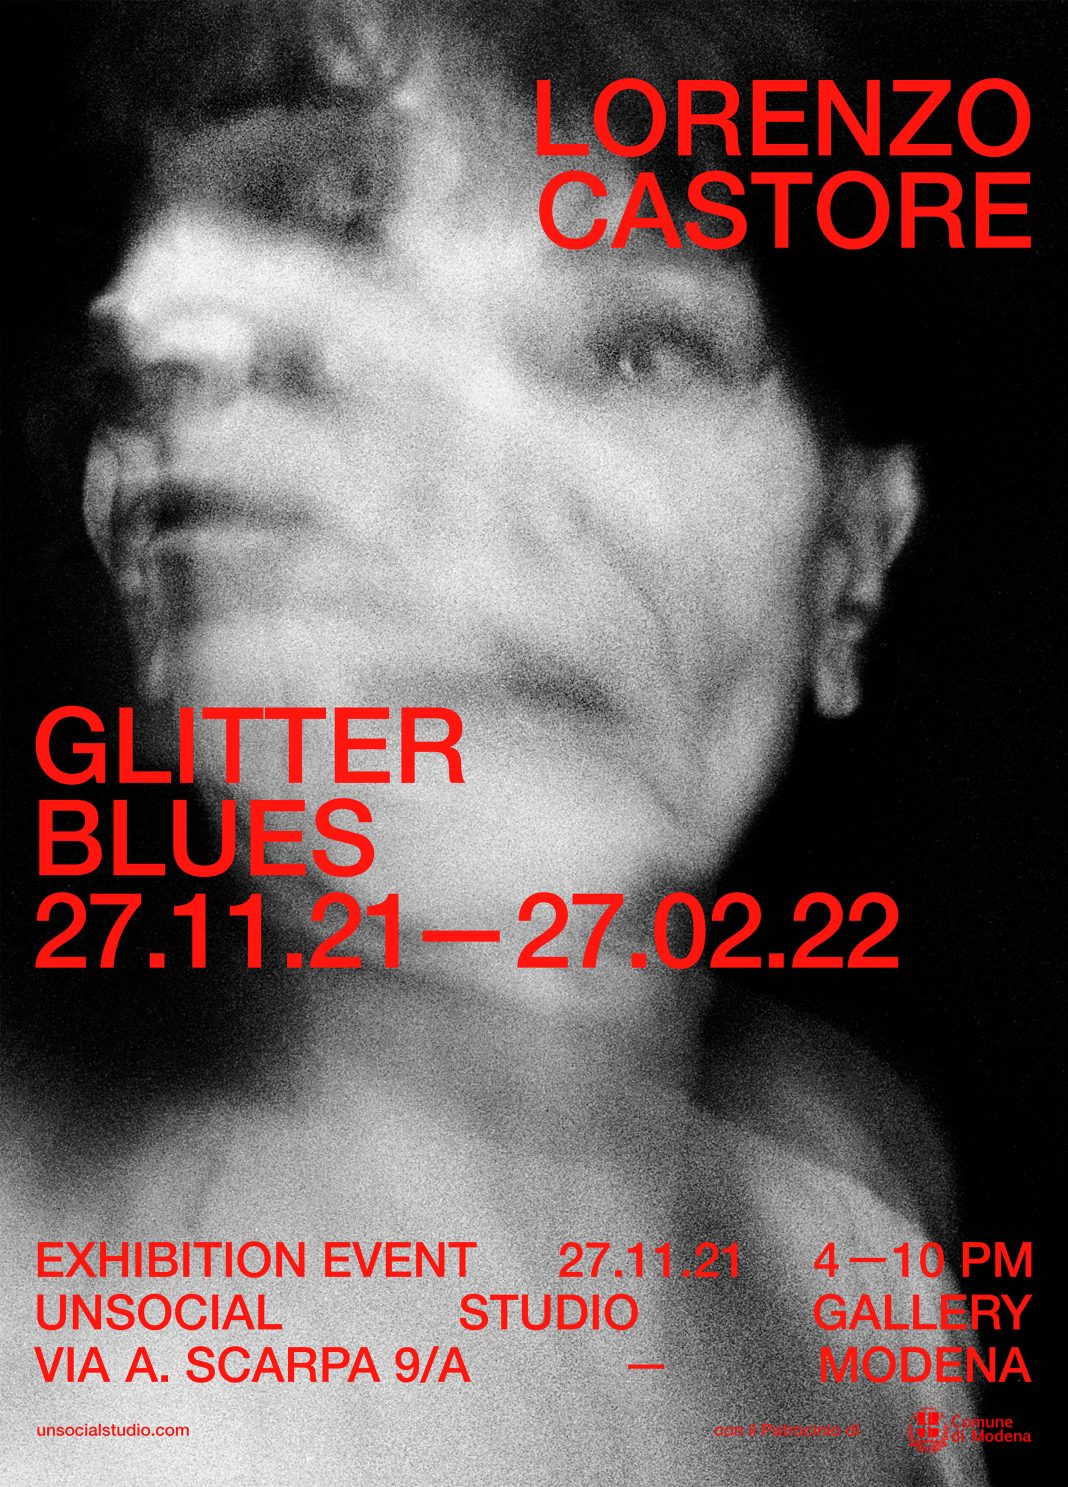 Lorenzo Castore – Glitter Blueshttps://www.exibart.com/repository/media/formidable/11/img/0d4/glitter_blues_poster_50x70-1068x1487.jpeg